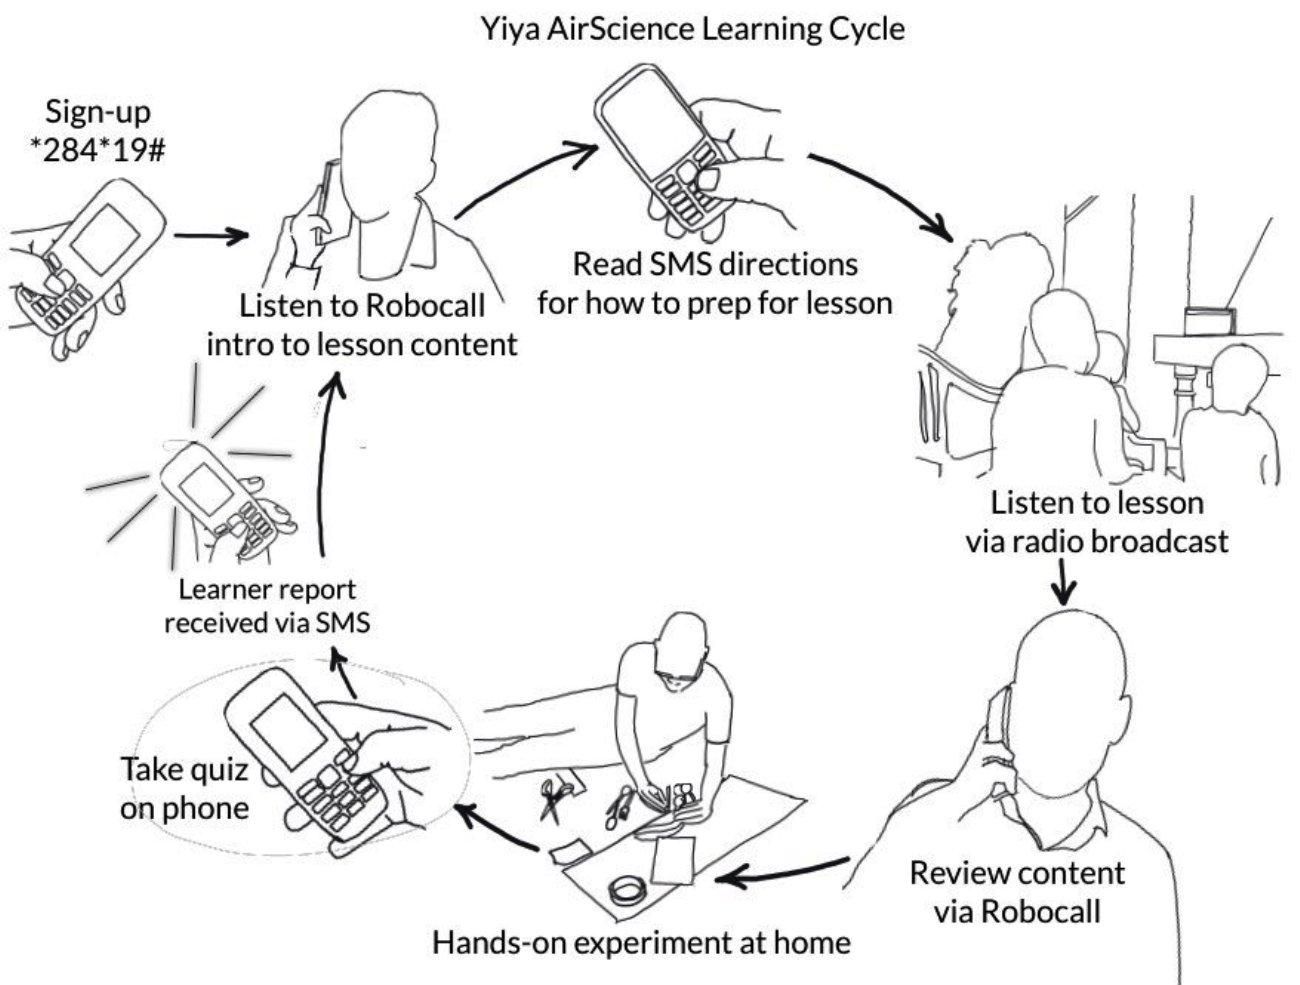 The Yiya AirScience Learning Cycle